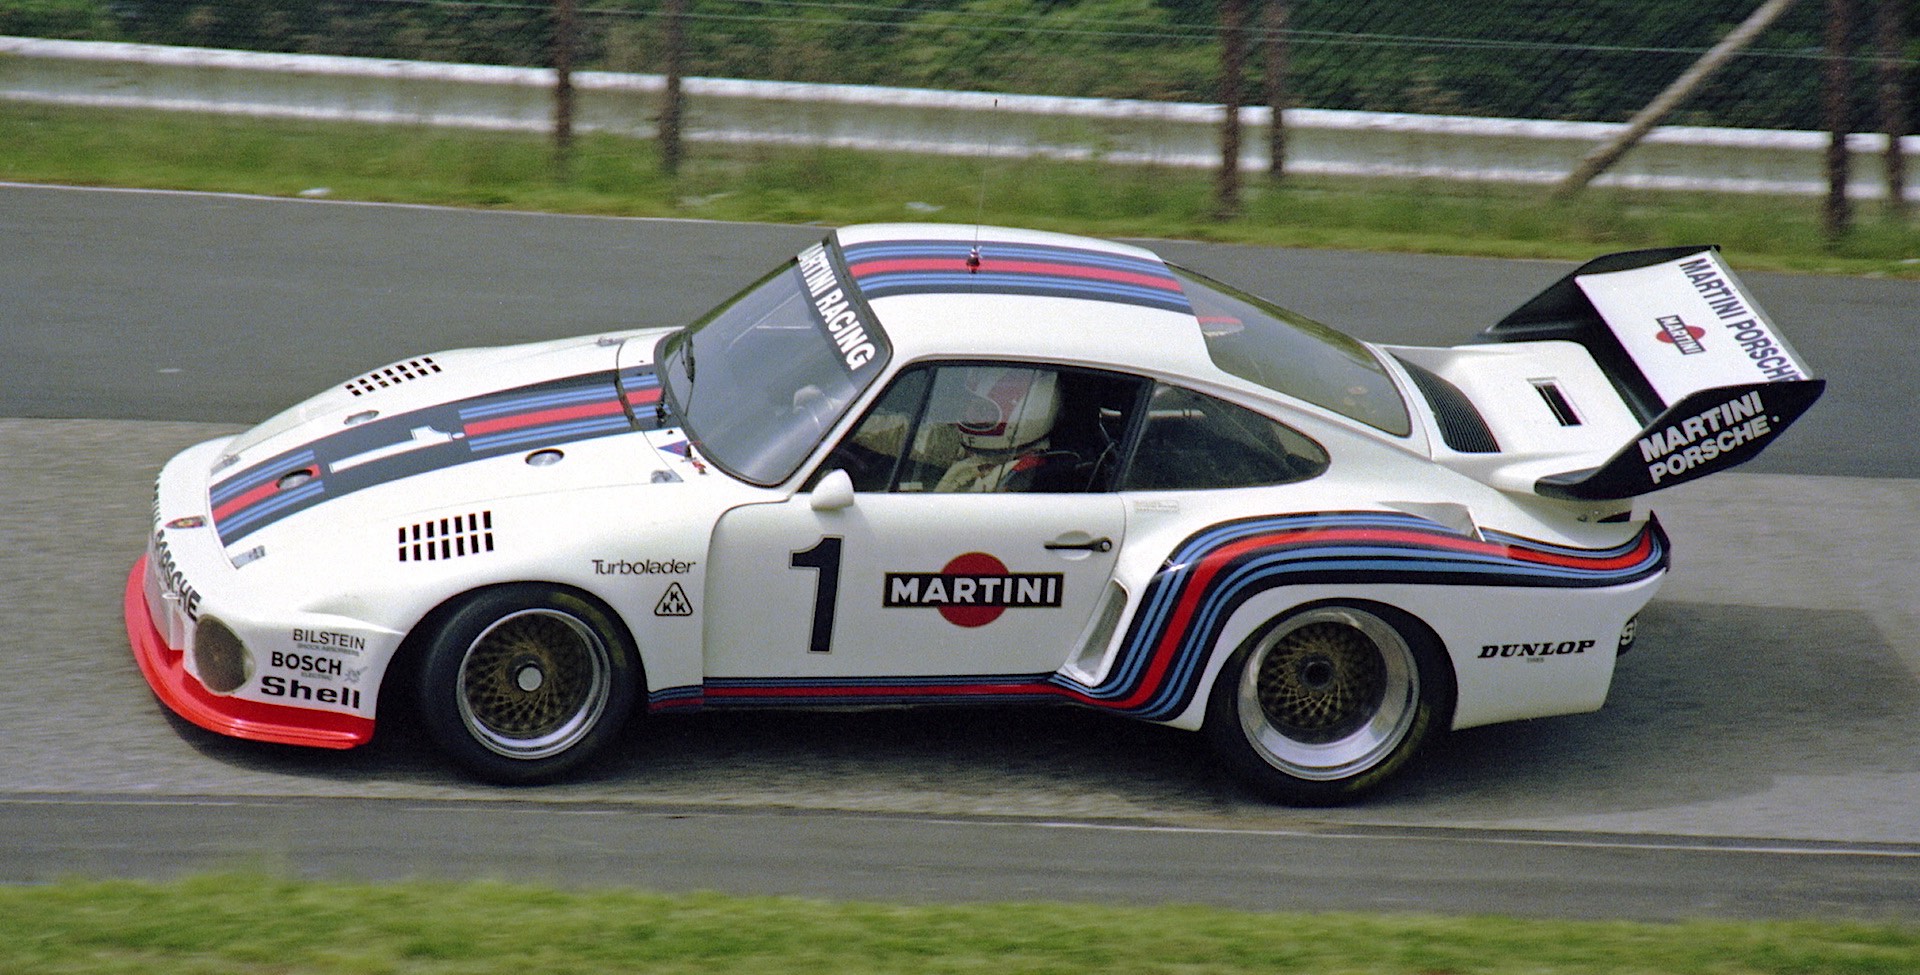 The racing Porsche 935 connection to the 911 slantnose